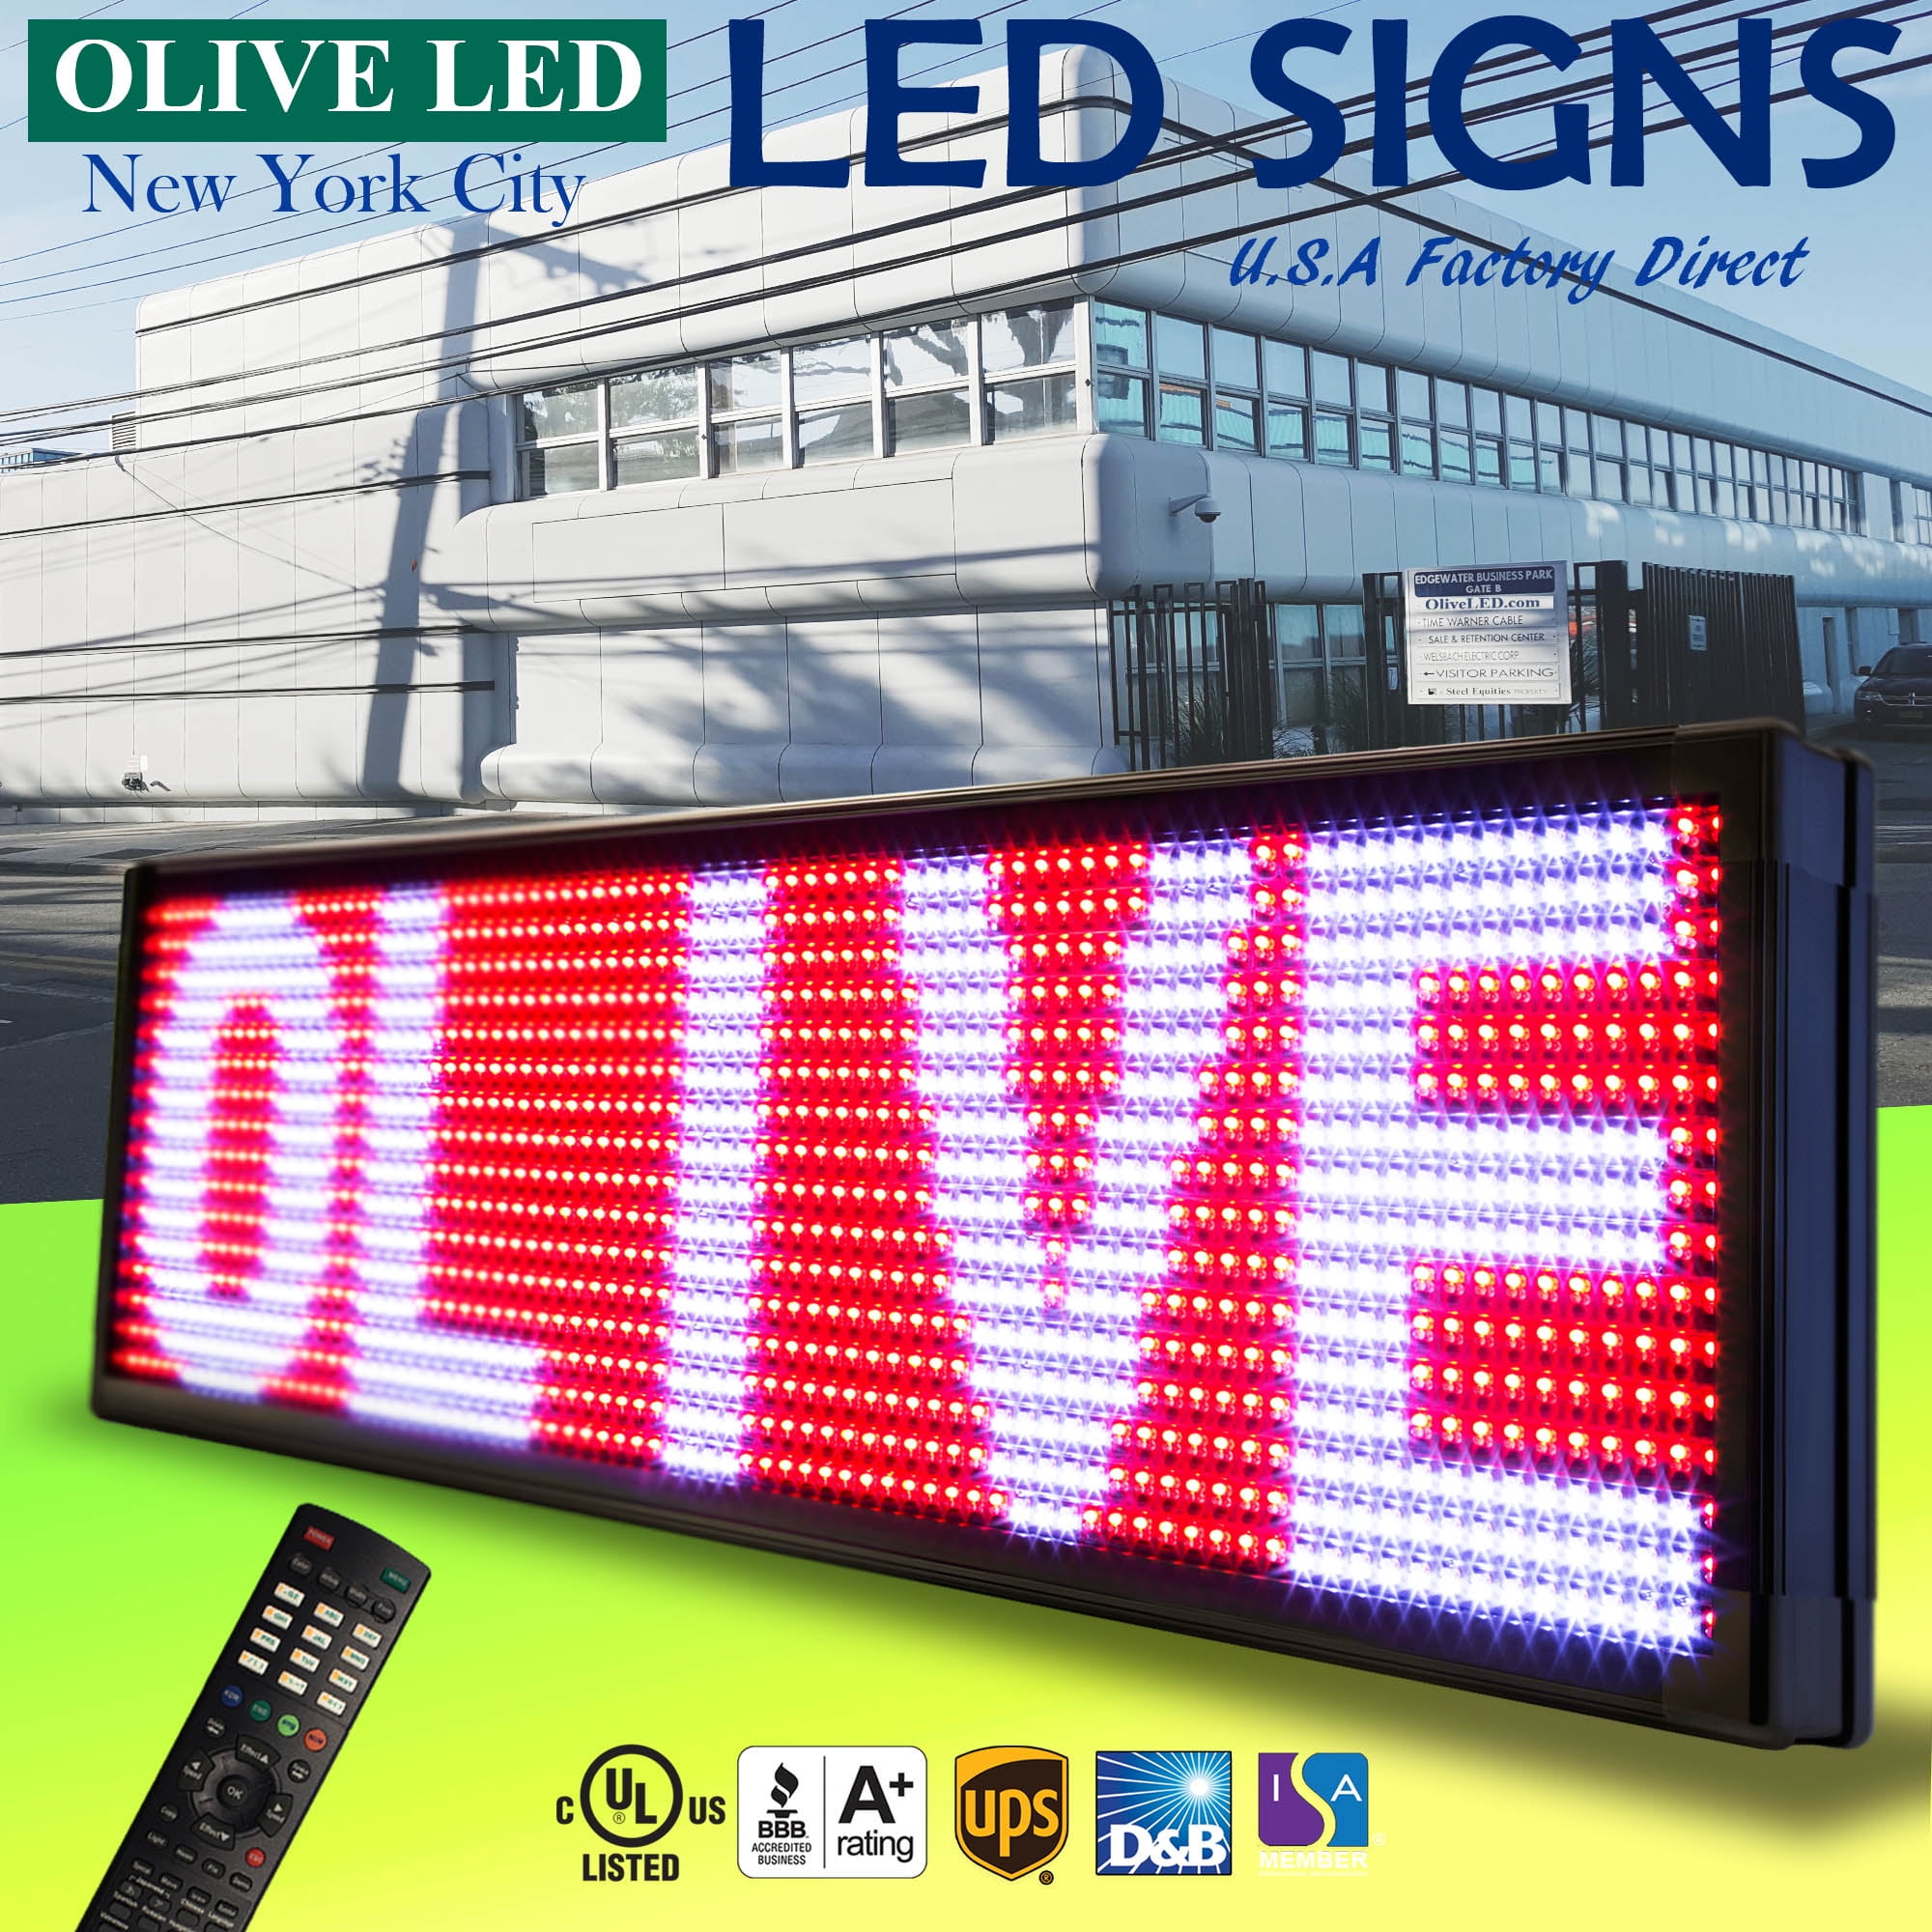 Vi ses bånd høj OLIVE LED Sign 3Color RWP 12"x60" IR - Programmable Message Display EMC,  Scrolling Reader Board. Advertising Panel, Neon Feature + more - Walmart.com